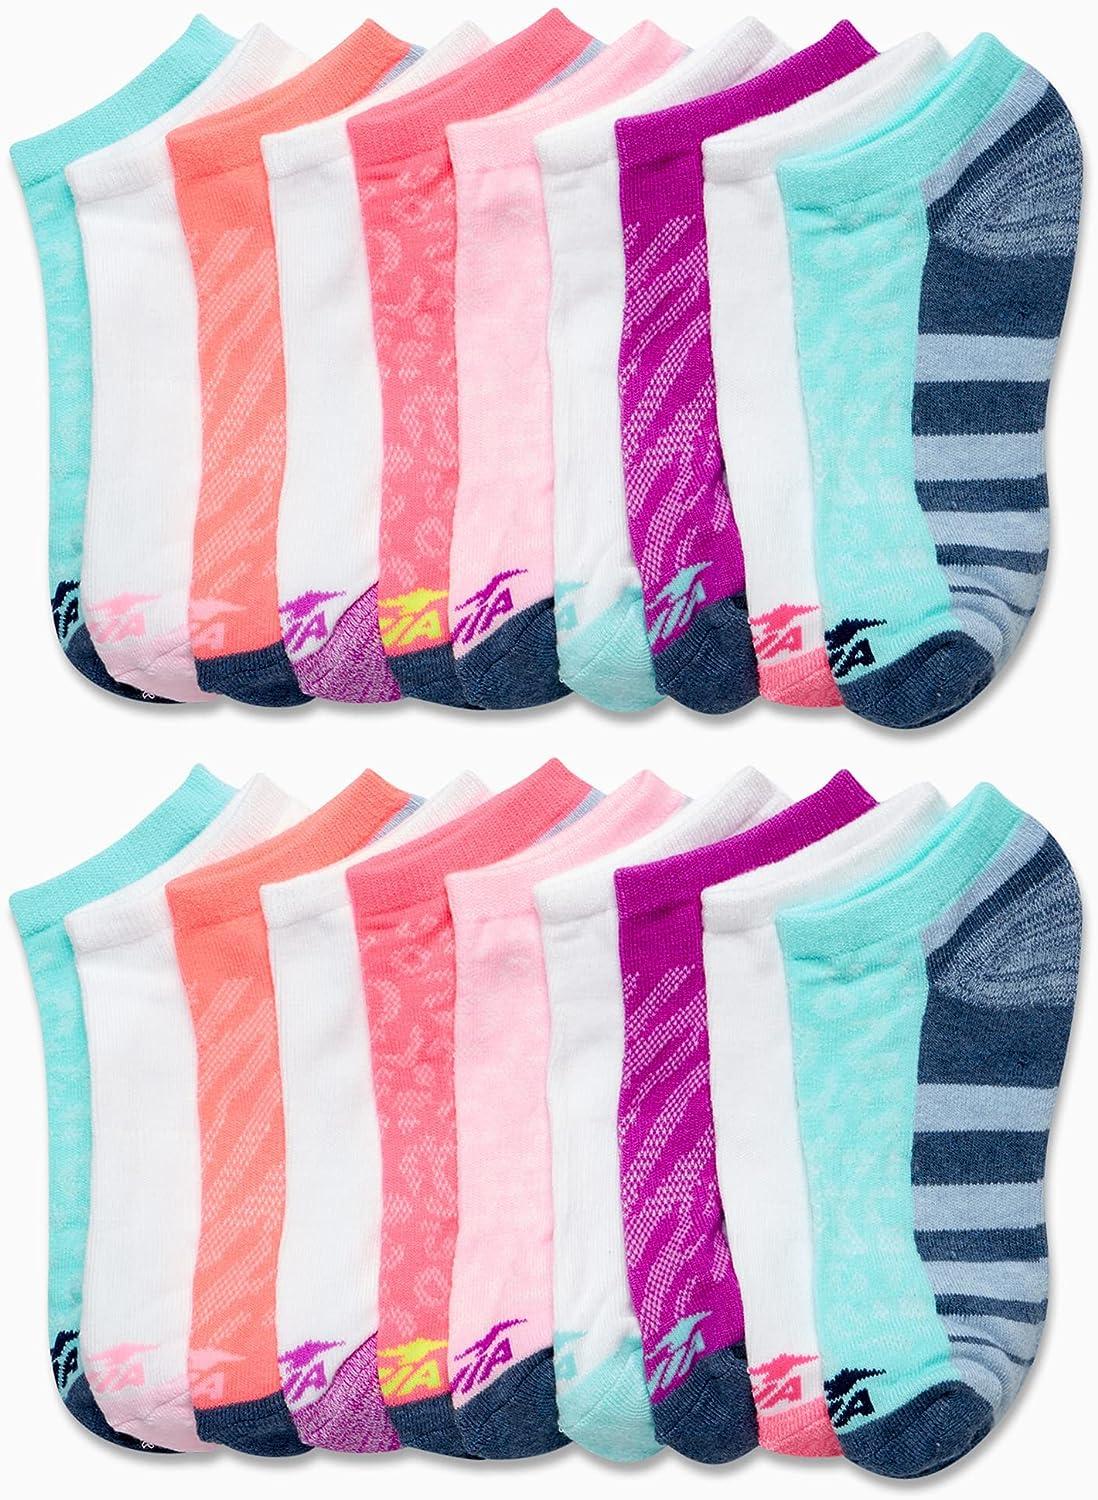 Avia Girls' Socks - 20 Pack Performance Cushion Low Cut Socks